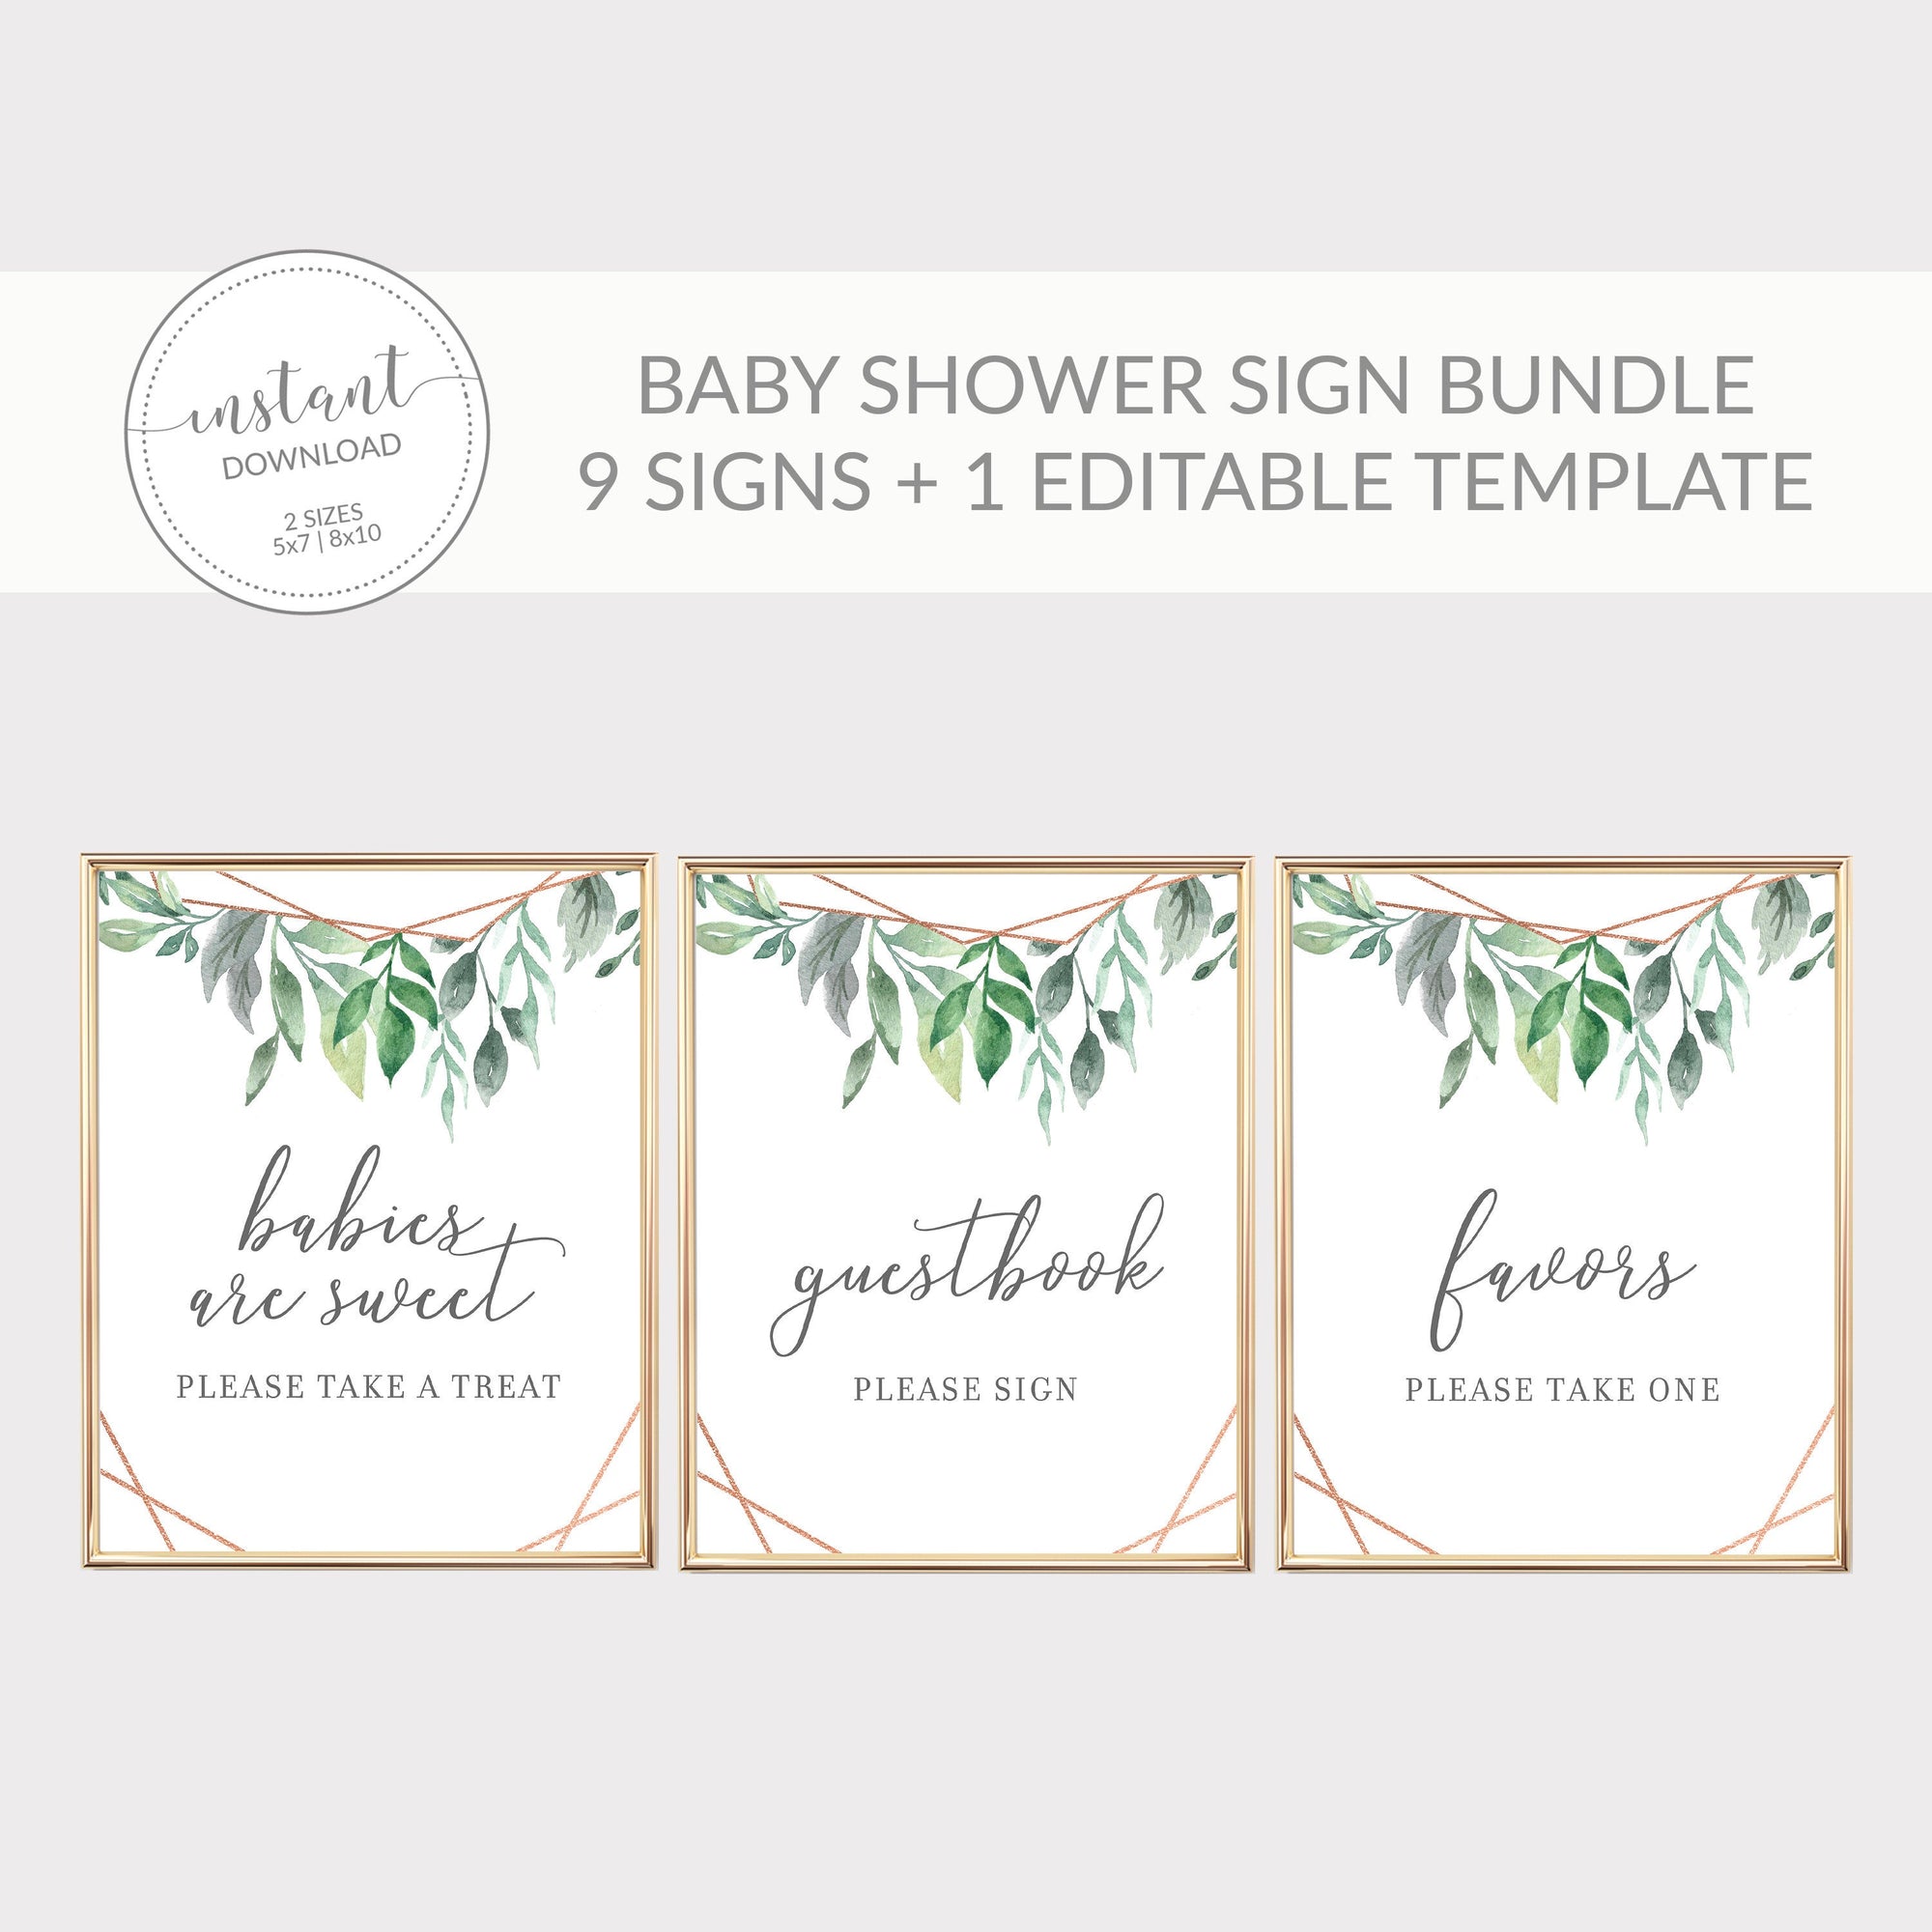 Greenery Baby Shower Decorations, Geometric Baby Shower Sign Bundle, Editable Baby Shower Template, DIGITAL DOWNLOAD - GFRG100 - @PlumPolkaDot 